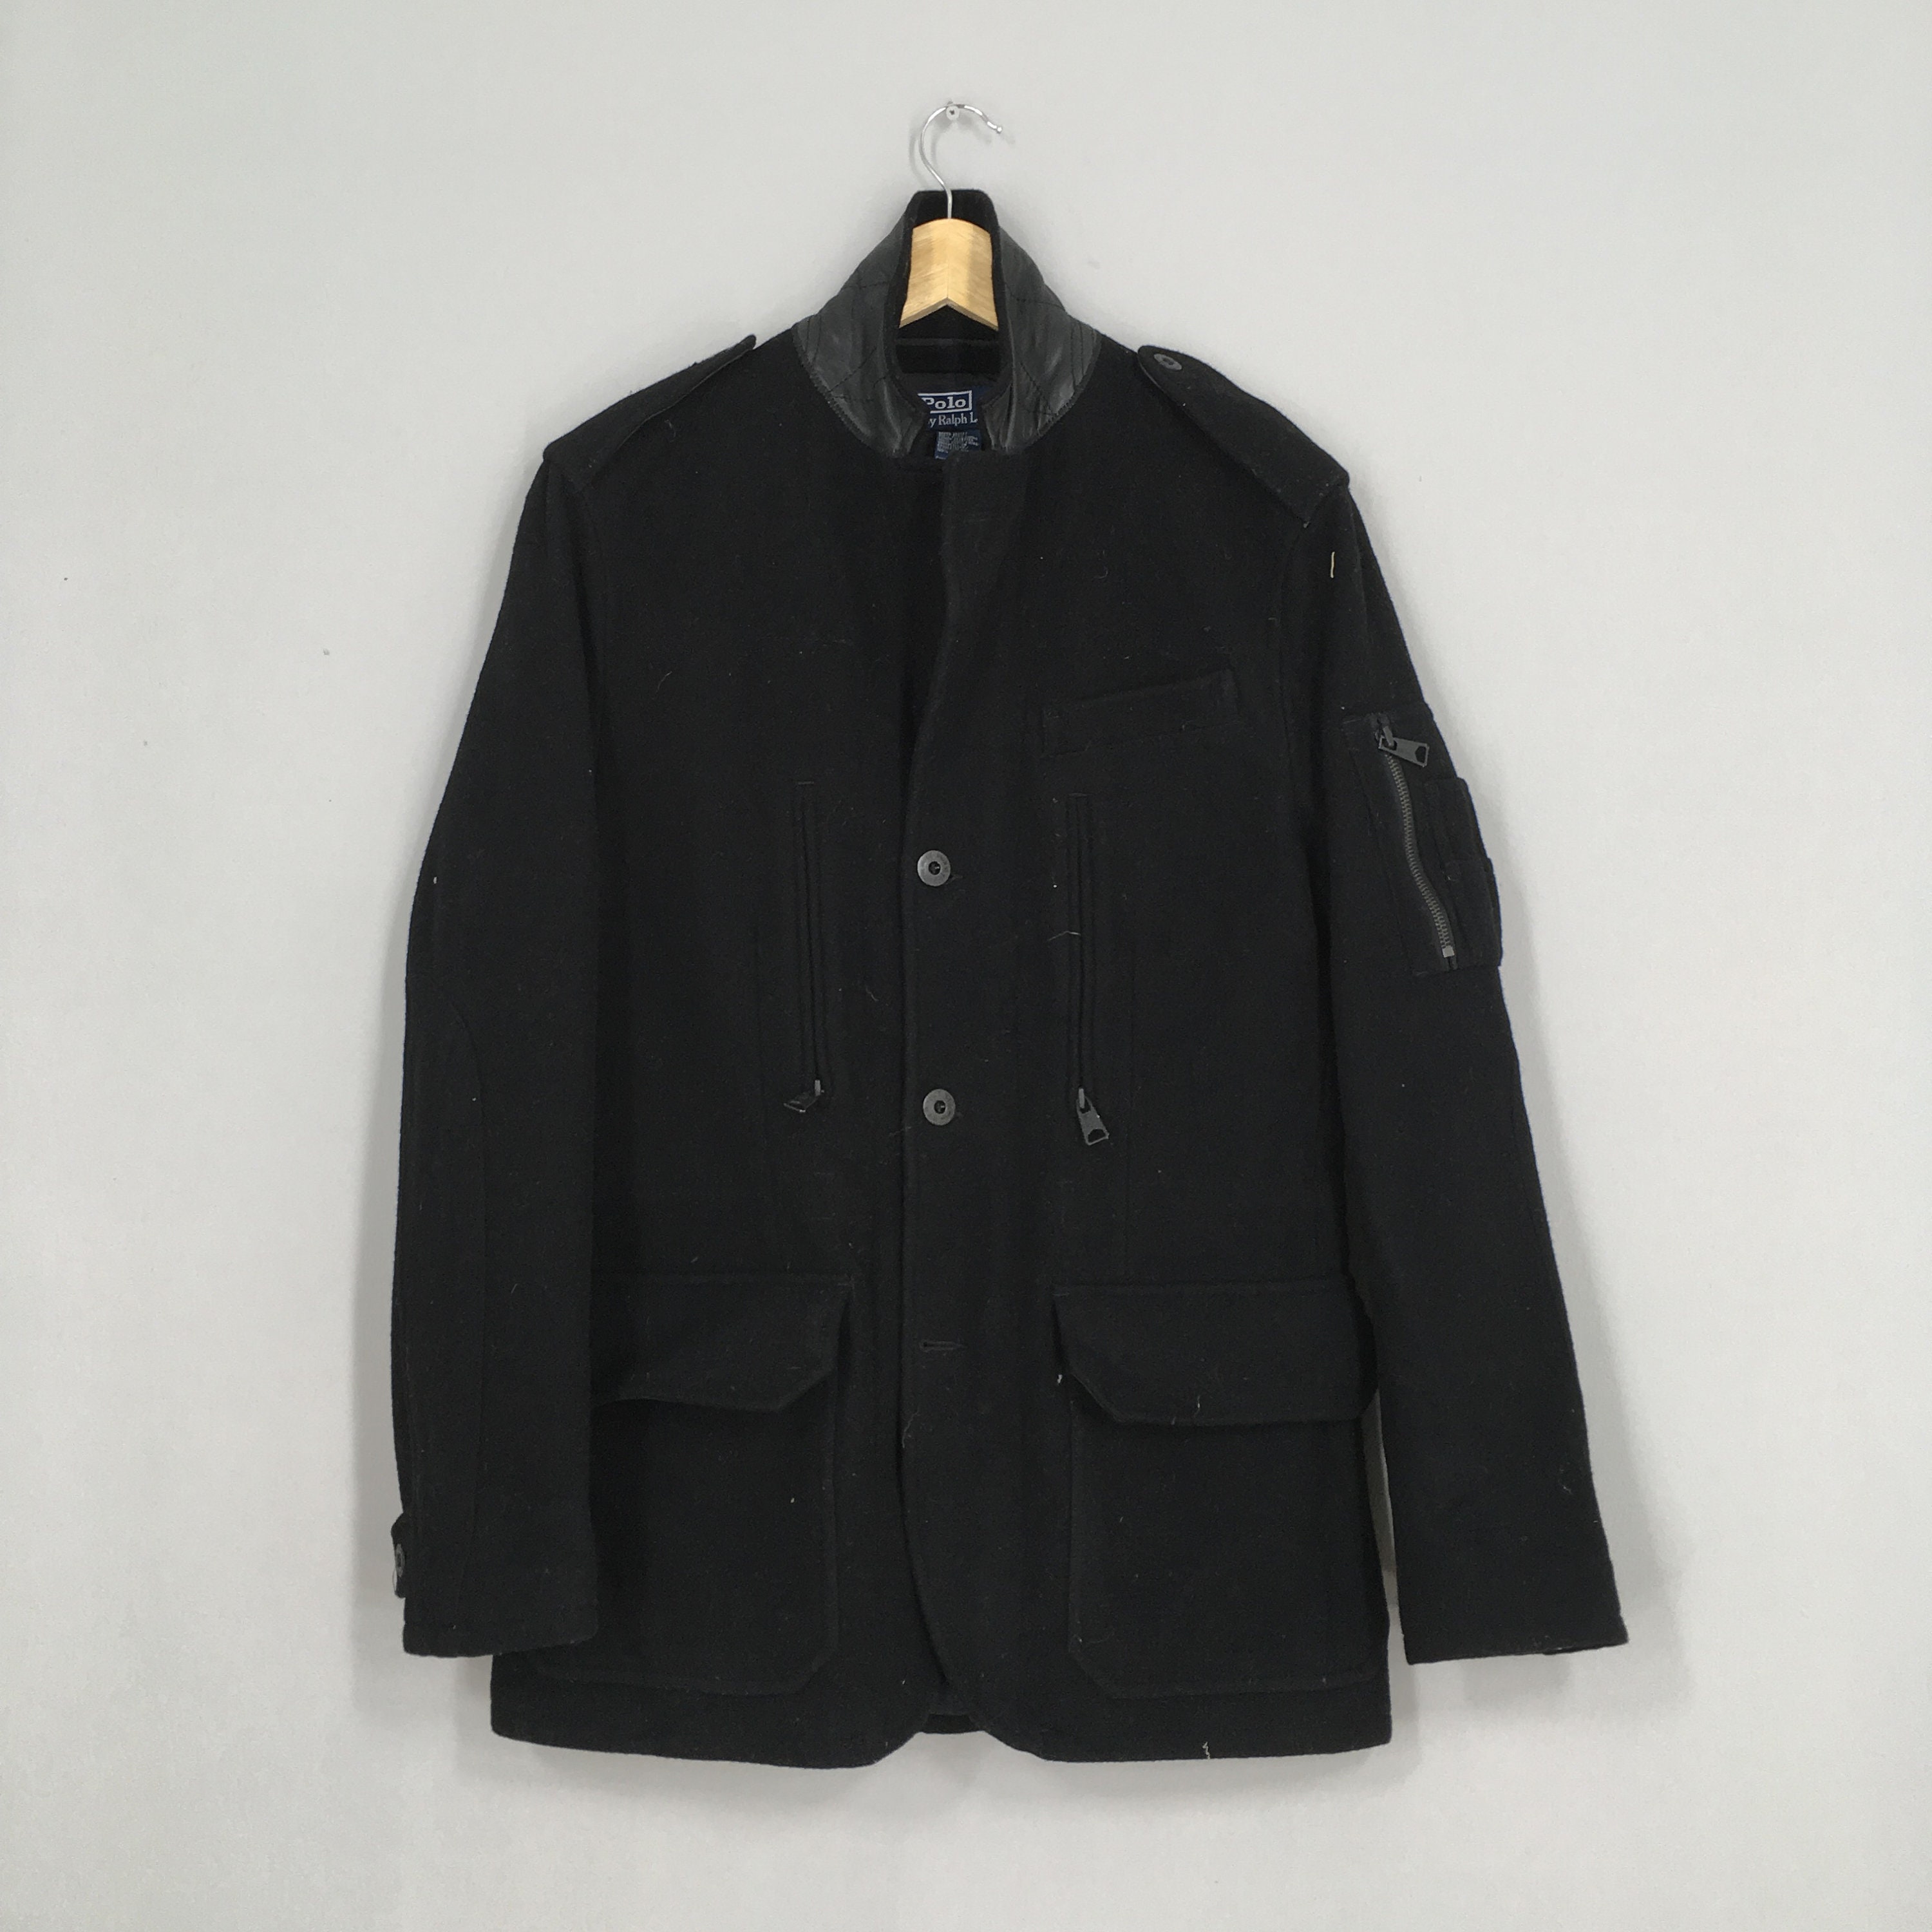 Polo Ralph Lauren Wool Casual Jacket Black Zipper Medium - Etsy